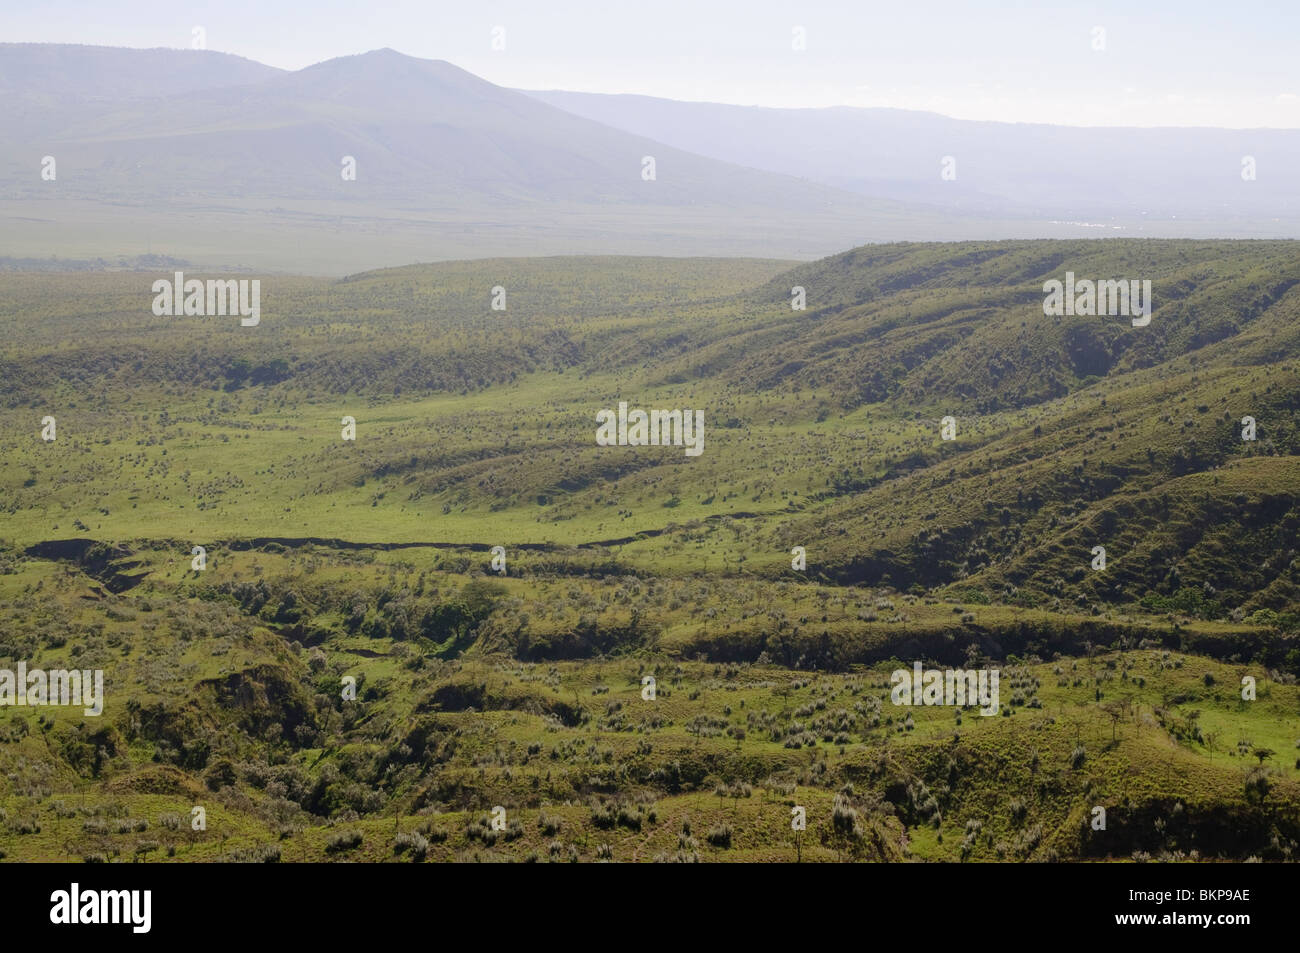 Terrenos verdes en el ondulado paisaje de monte Longonot National Park, Kenia Foto de stock